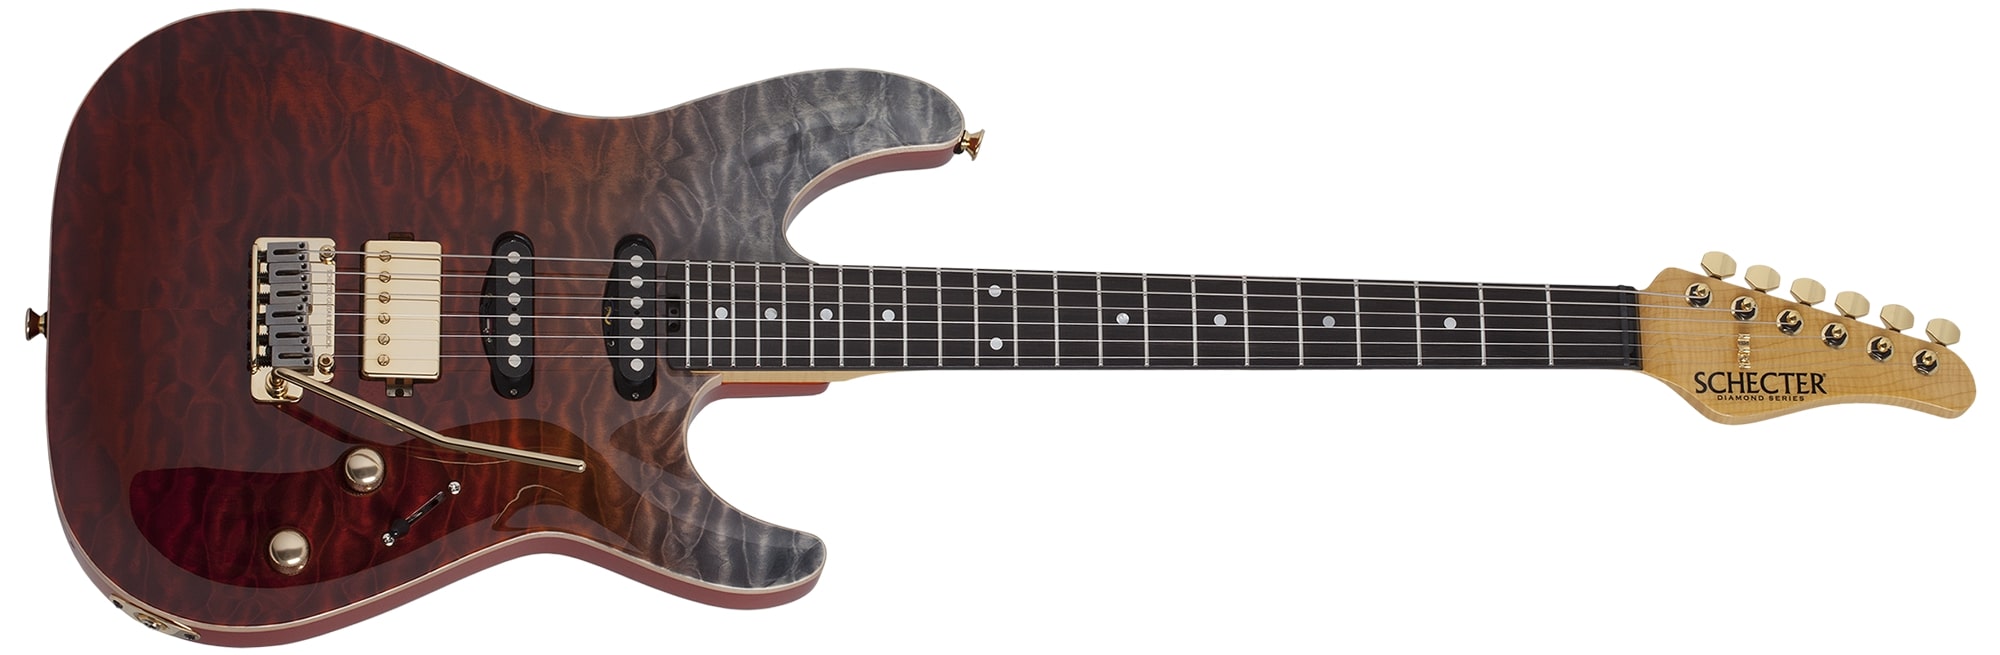 Schecter Japan California Classic Electric Guitar With Hardcase, Bengal Fade 7303-SHC